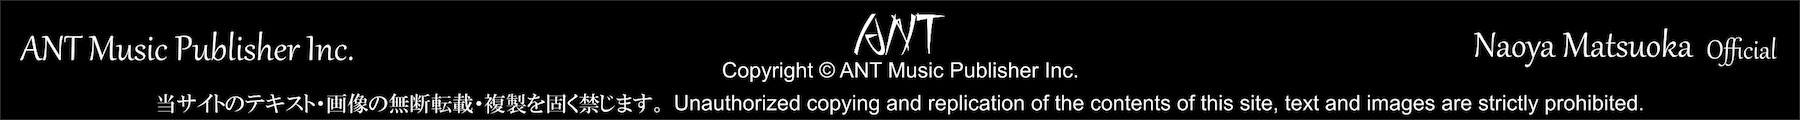 ANT Music Publisher Inc.